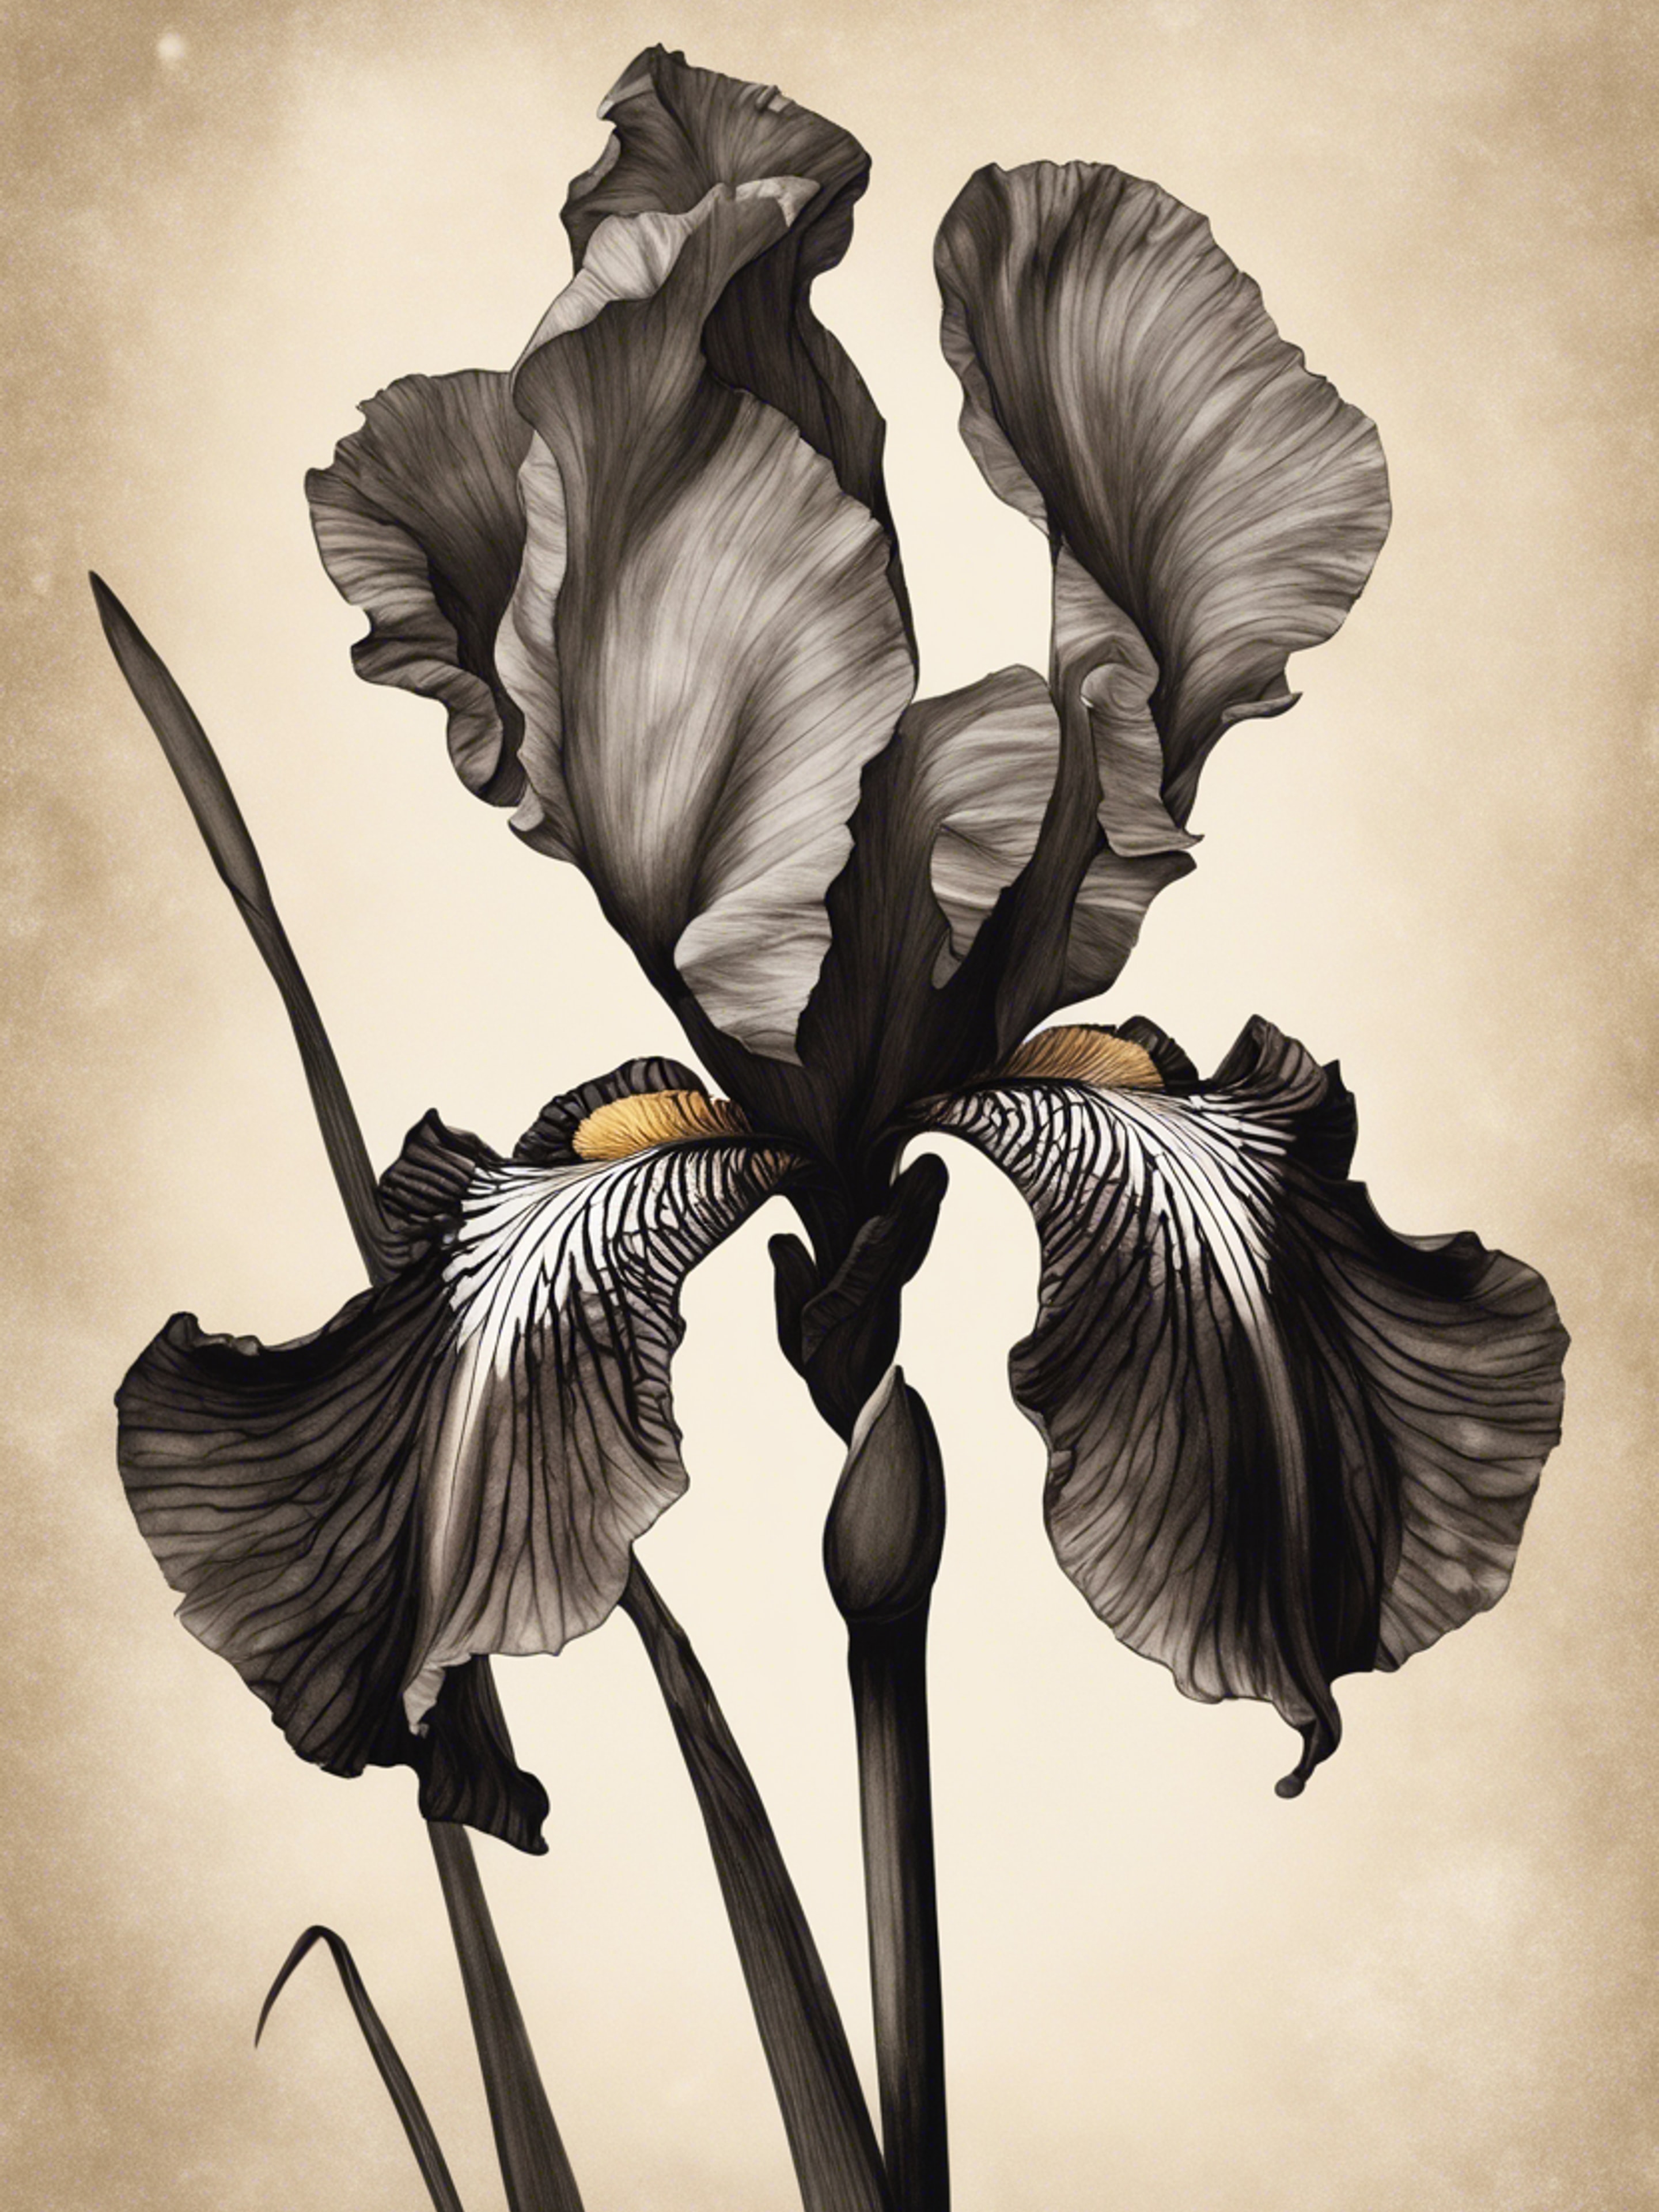 Vintage botanical illustration of a black iris with soft sepia tones.壁紙[2a4bd6e157a74e759ffb]